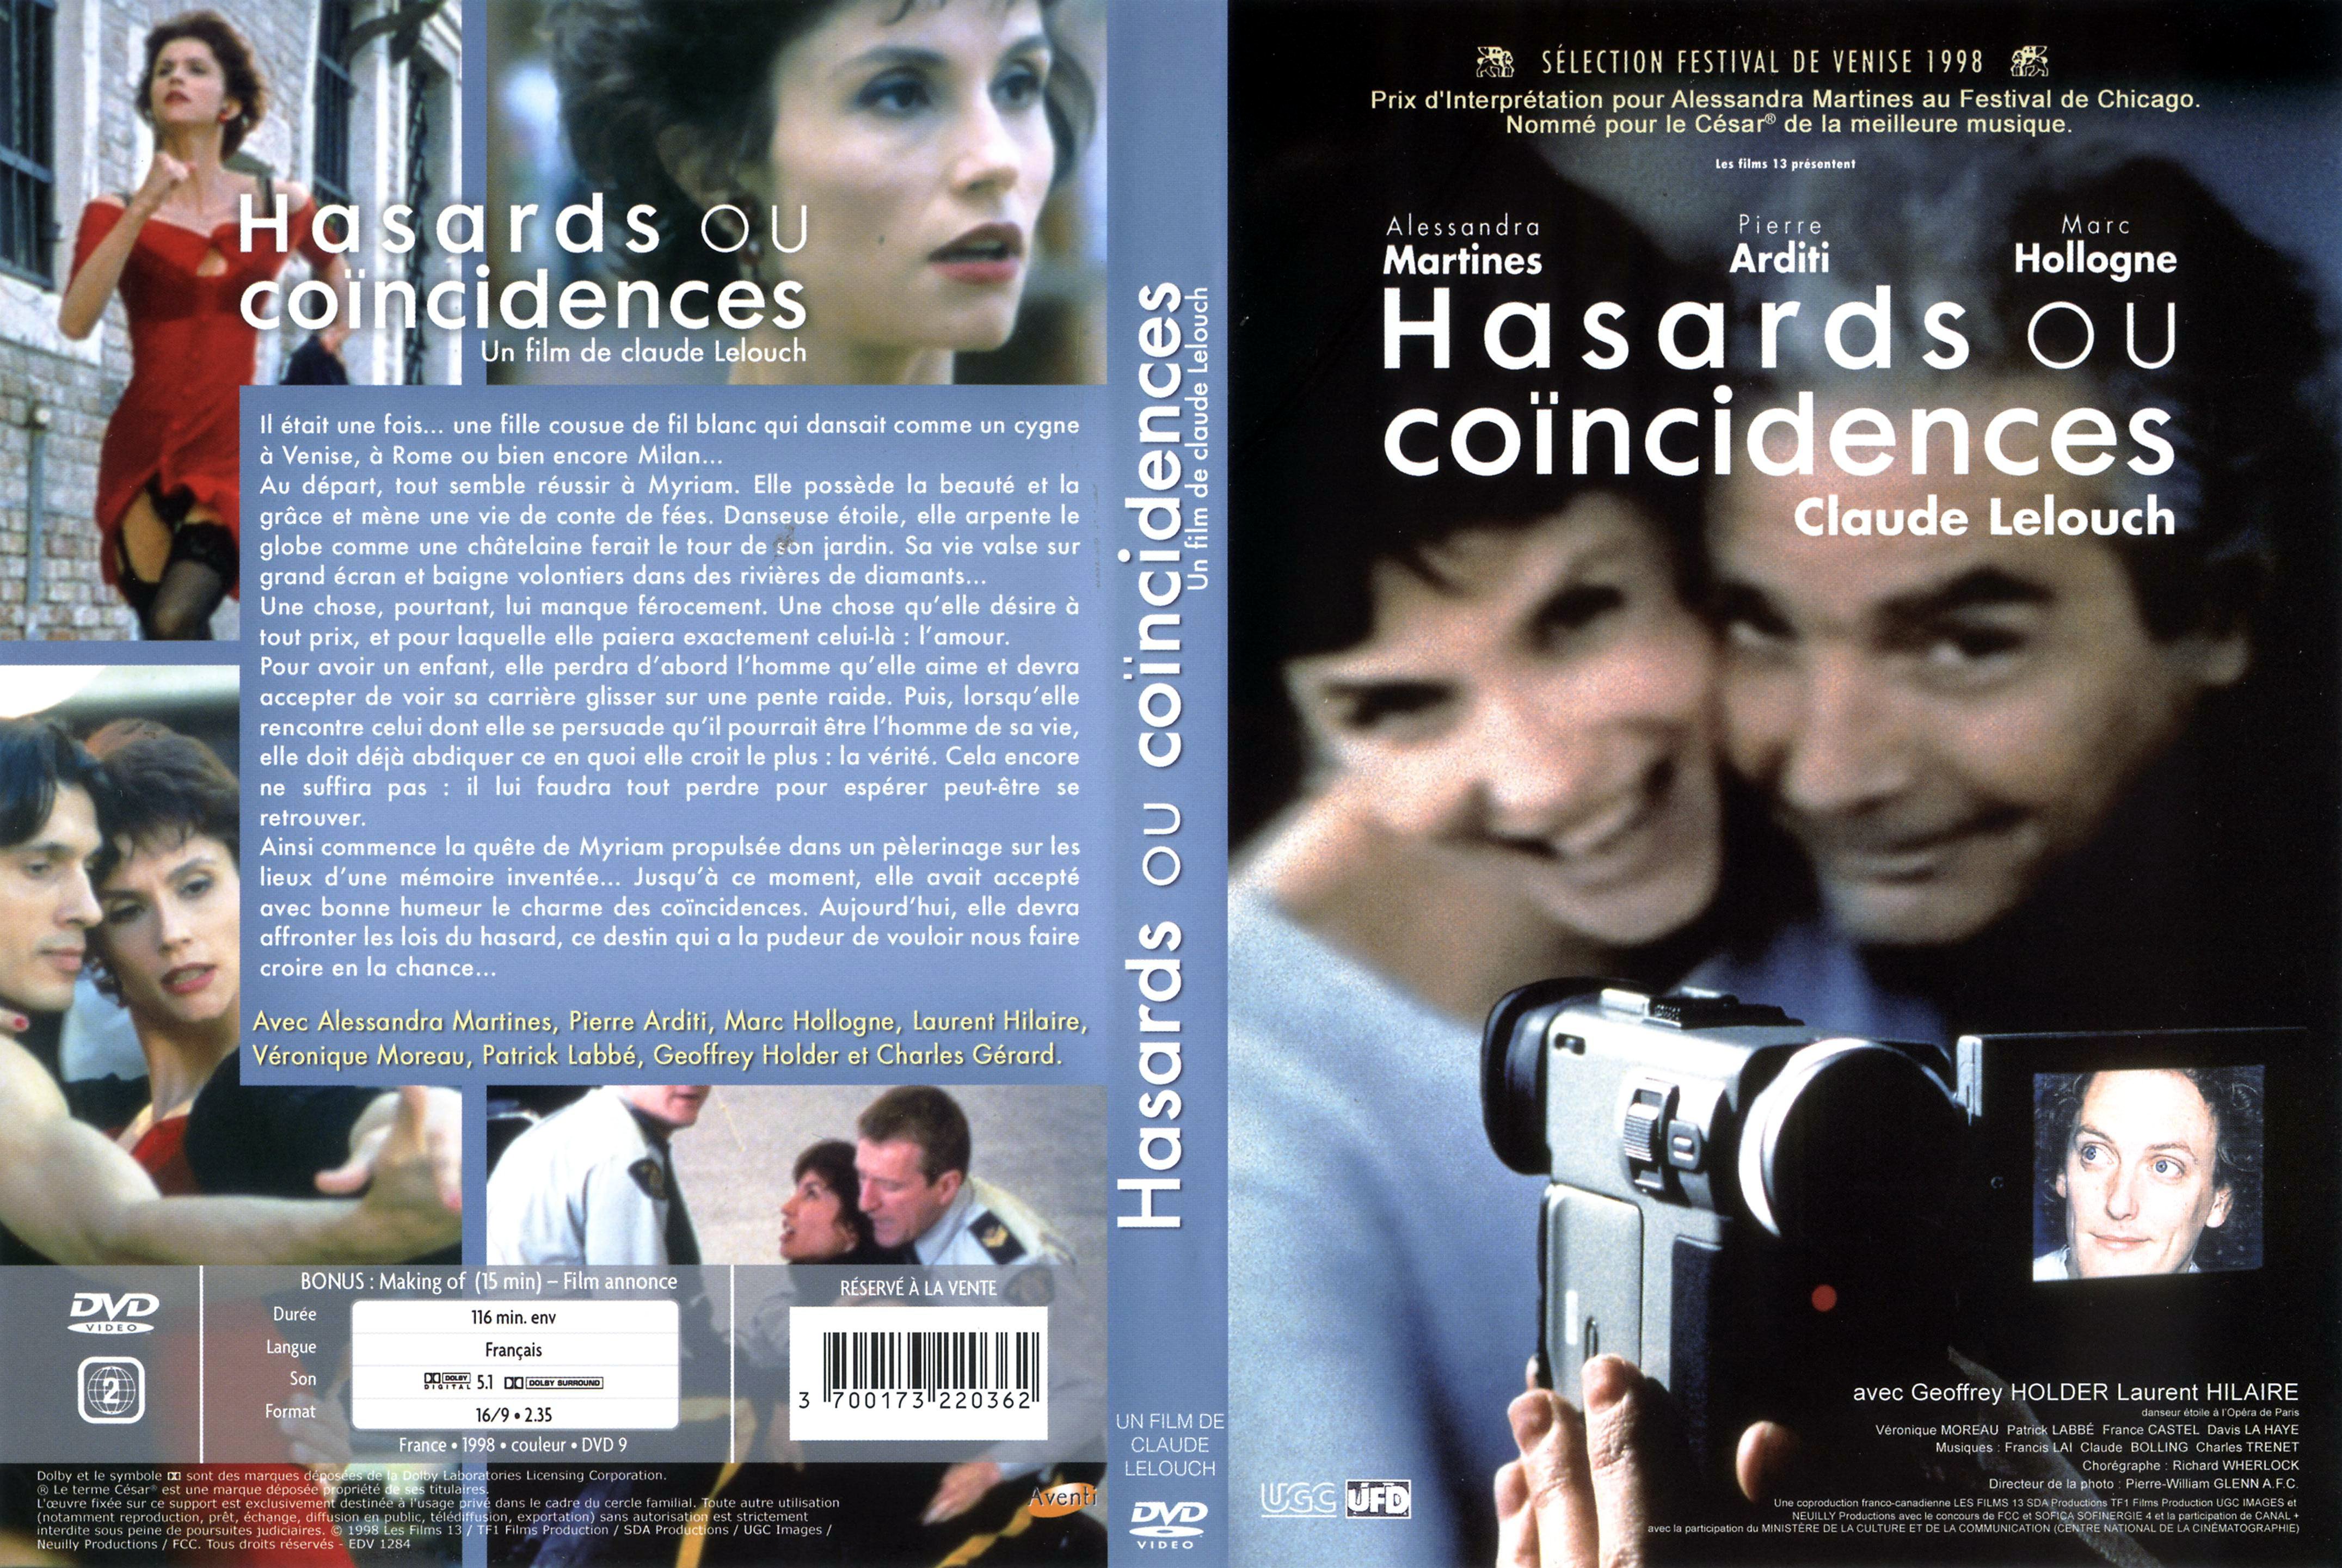 Jaquette DVD Hasards ou coincidences v2